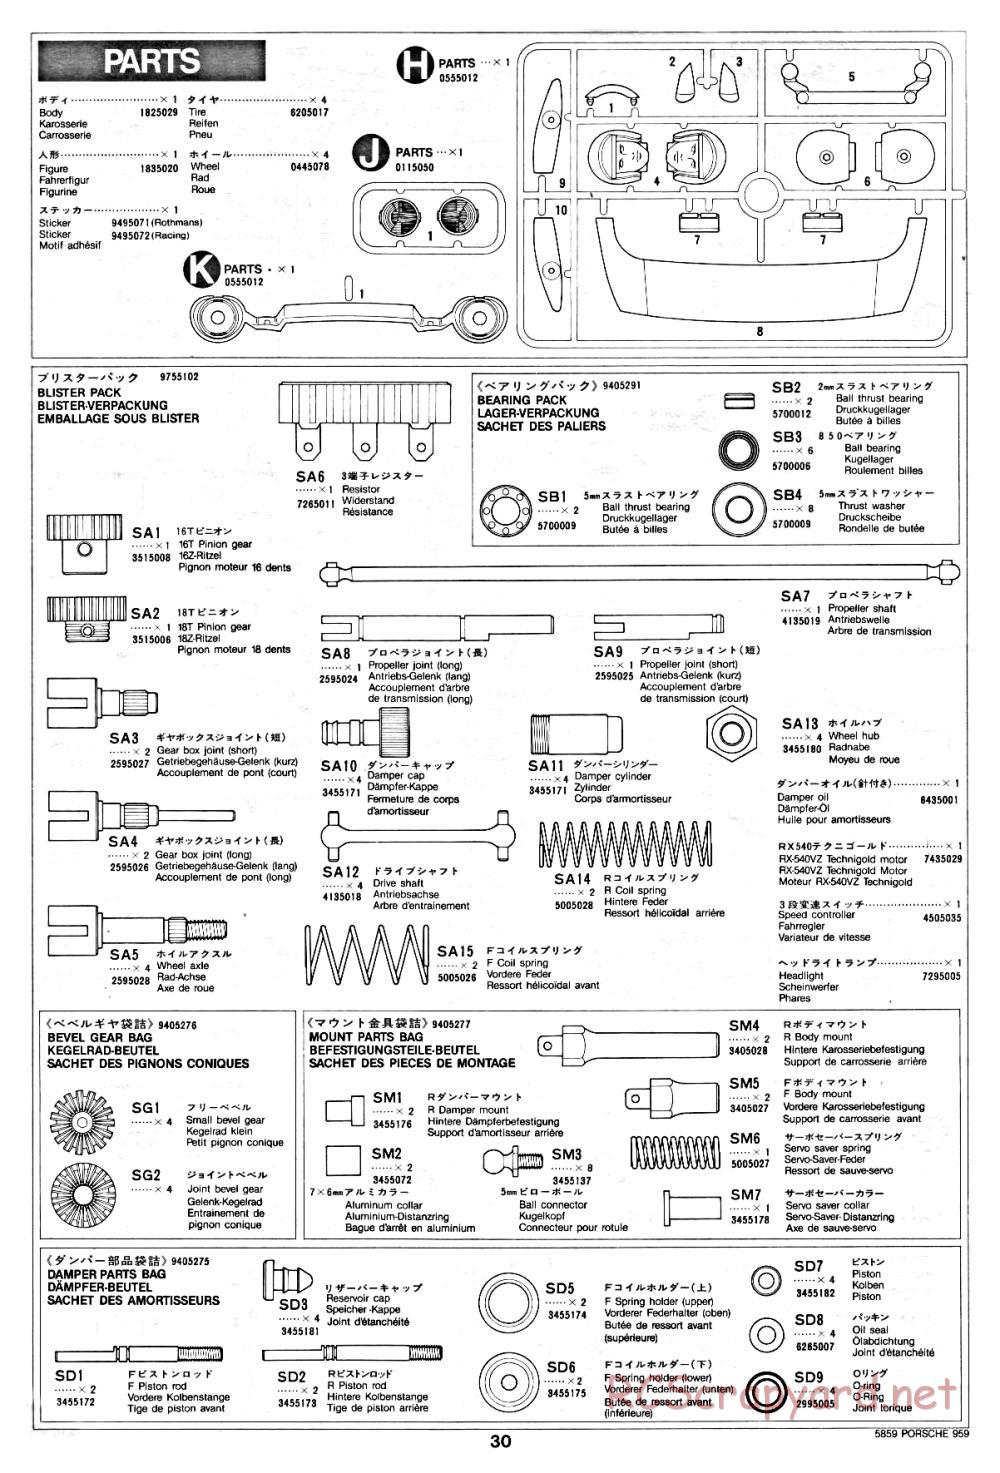 Tamiya - Porsche 959 - 58059 - Manual - Page 30